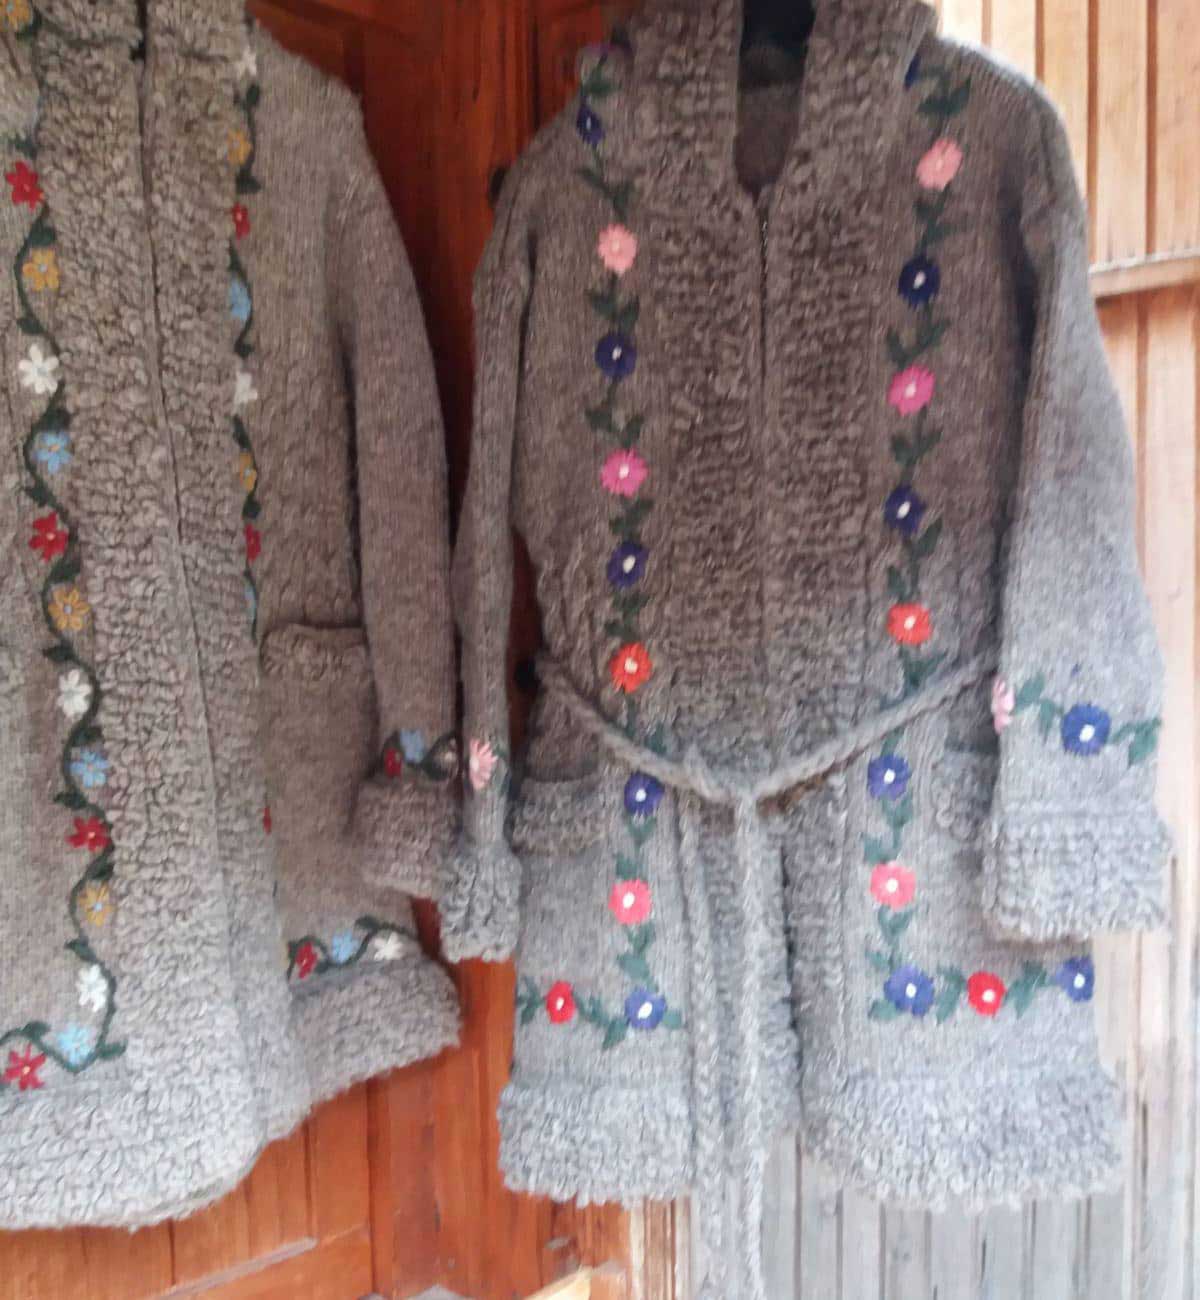 Sirogojno, Serbian tradition, Serbian culture, wool knitting